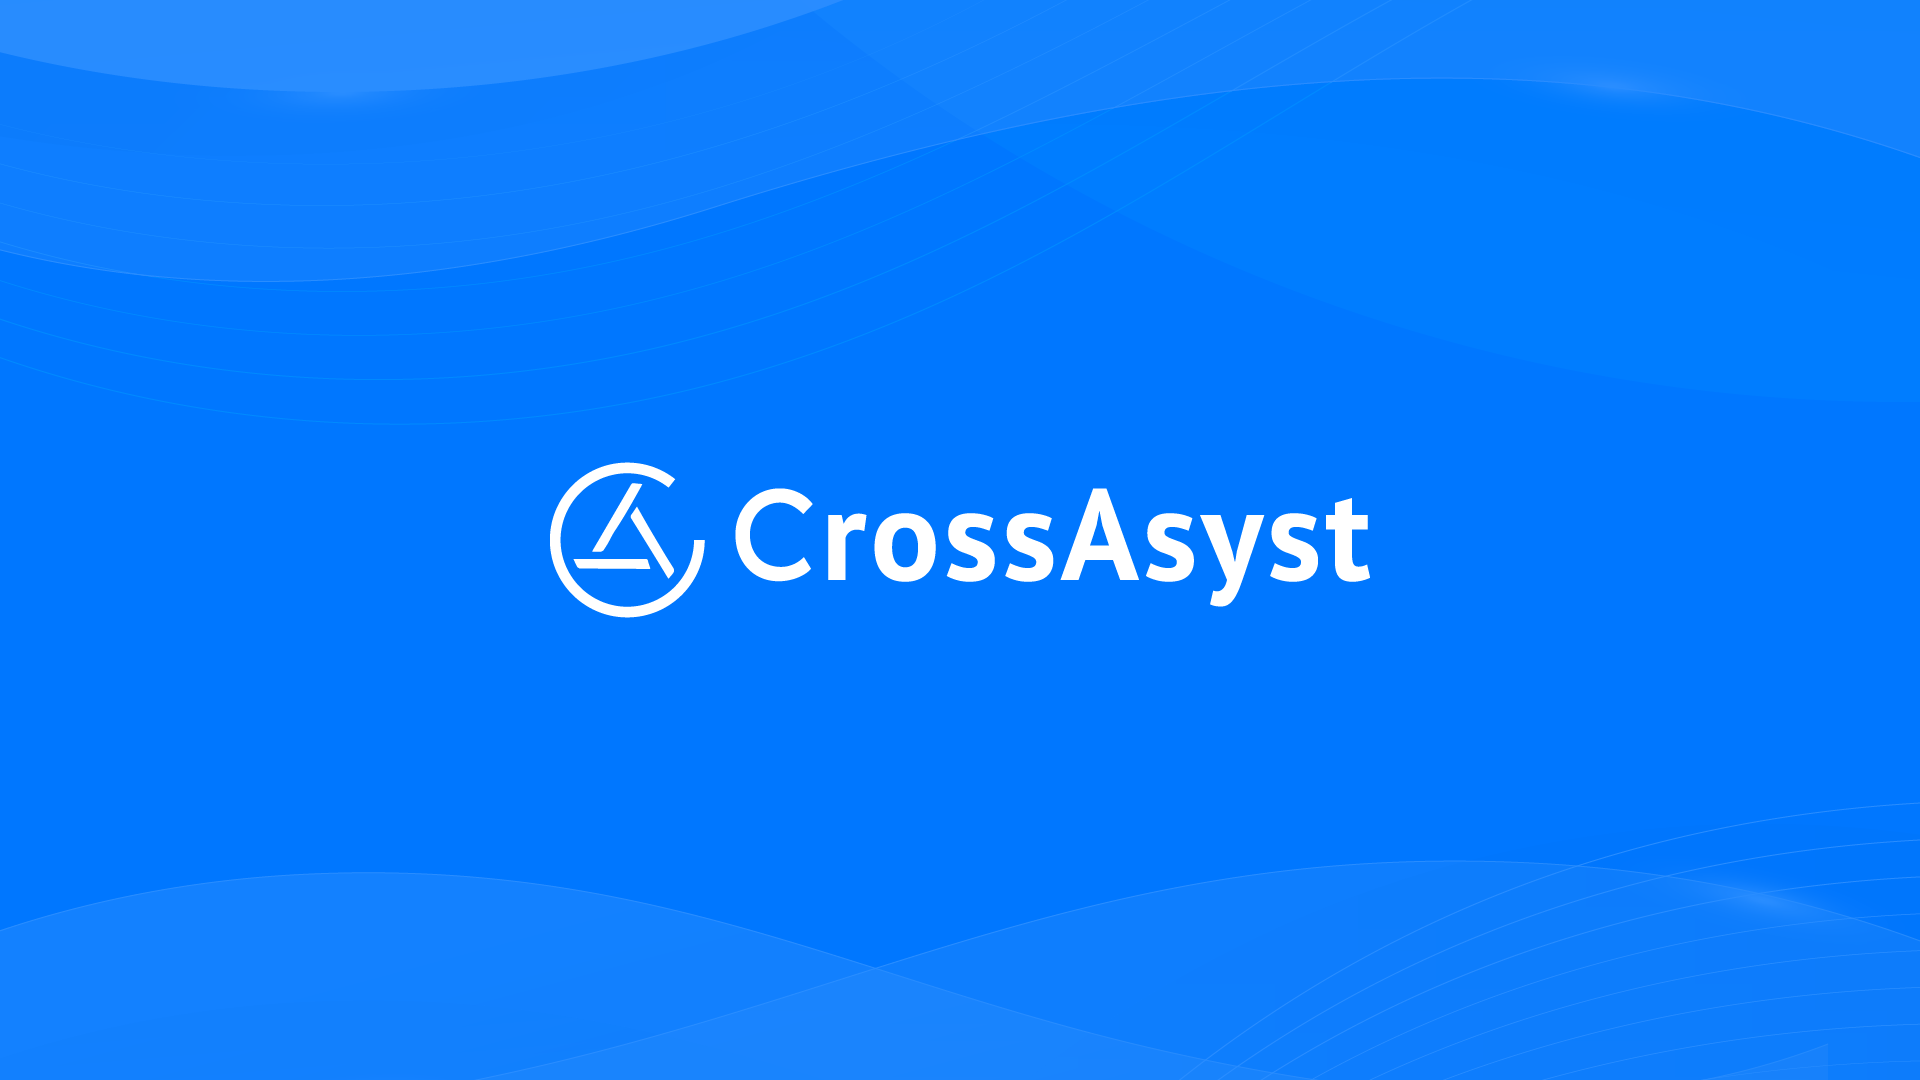 CrossAsyst